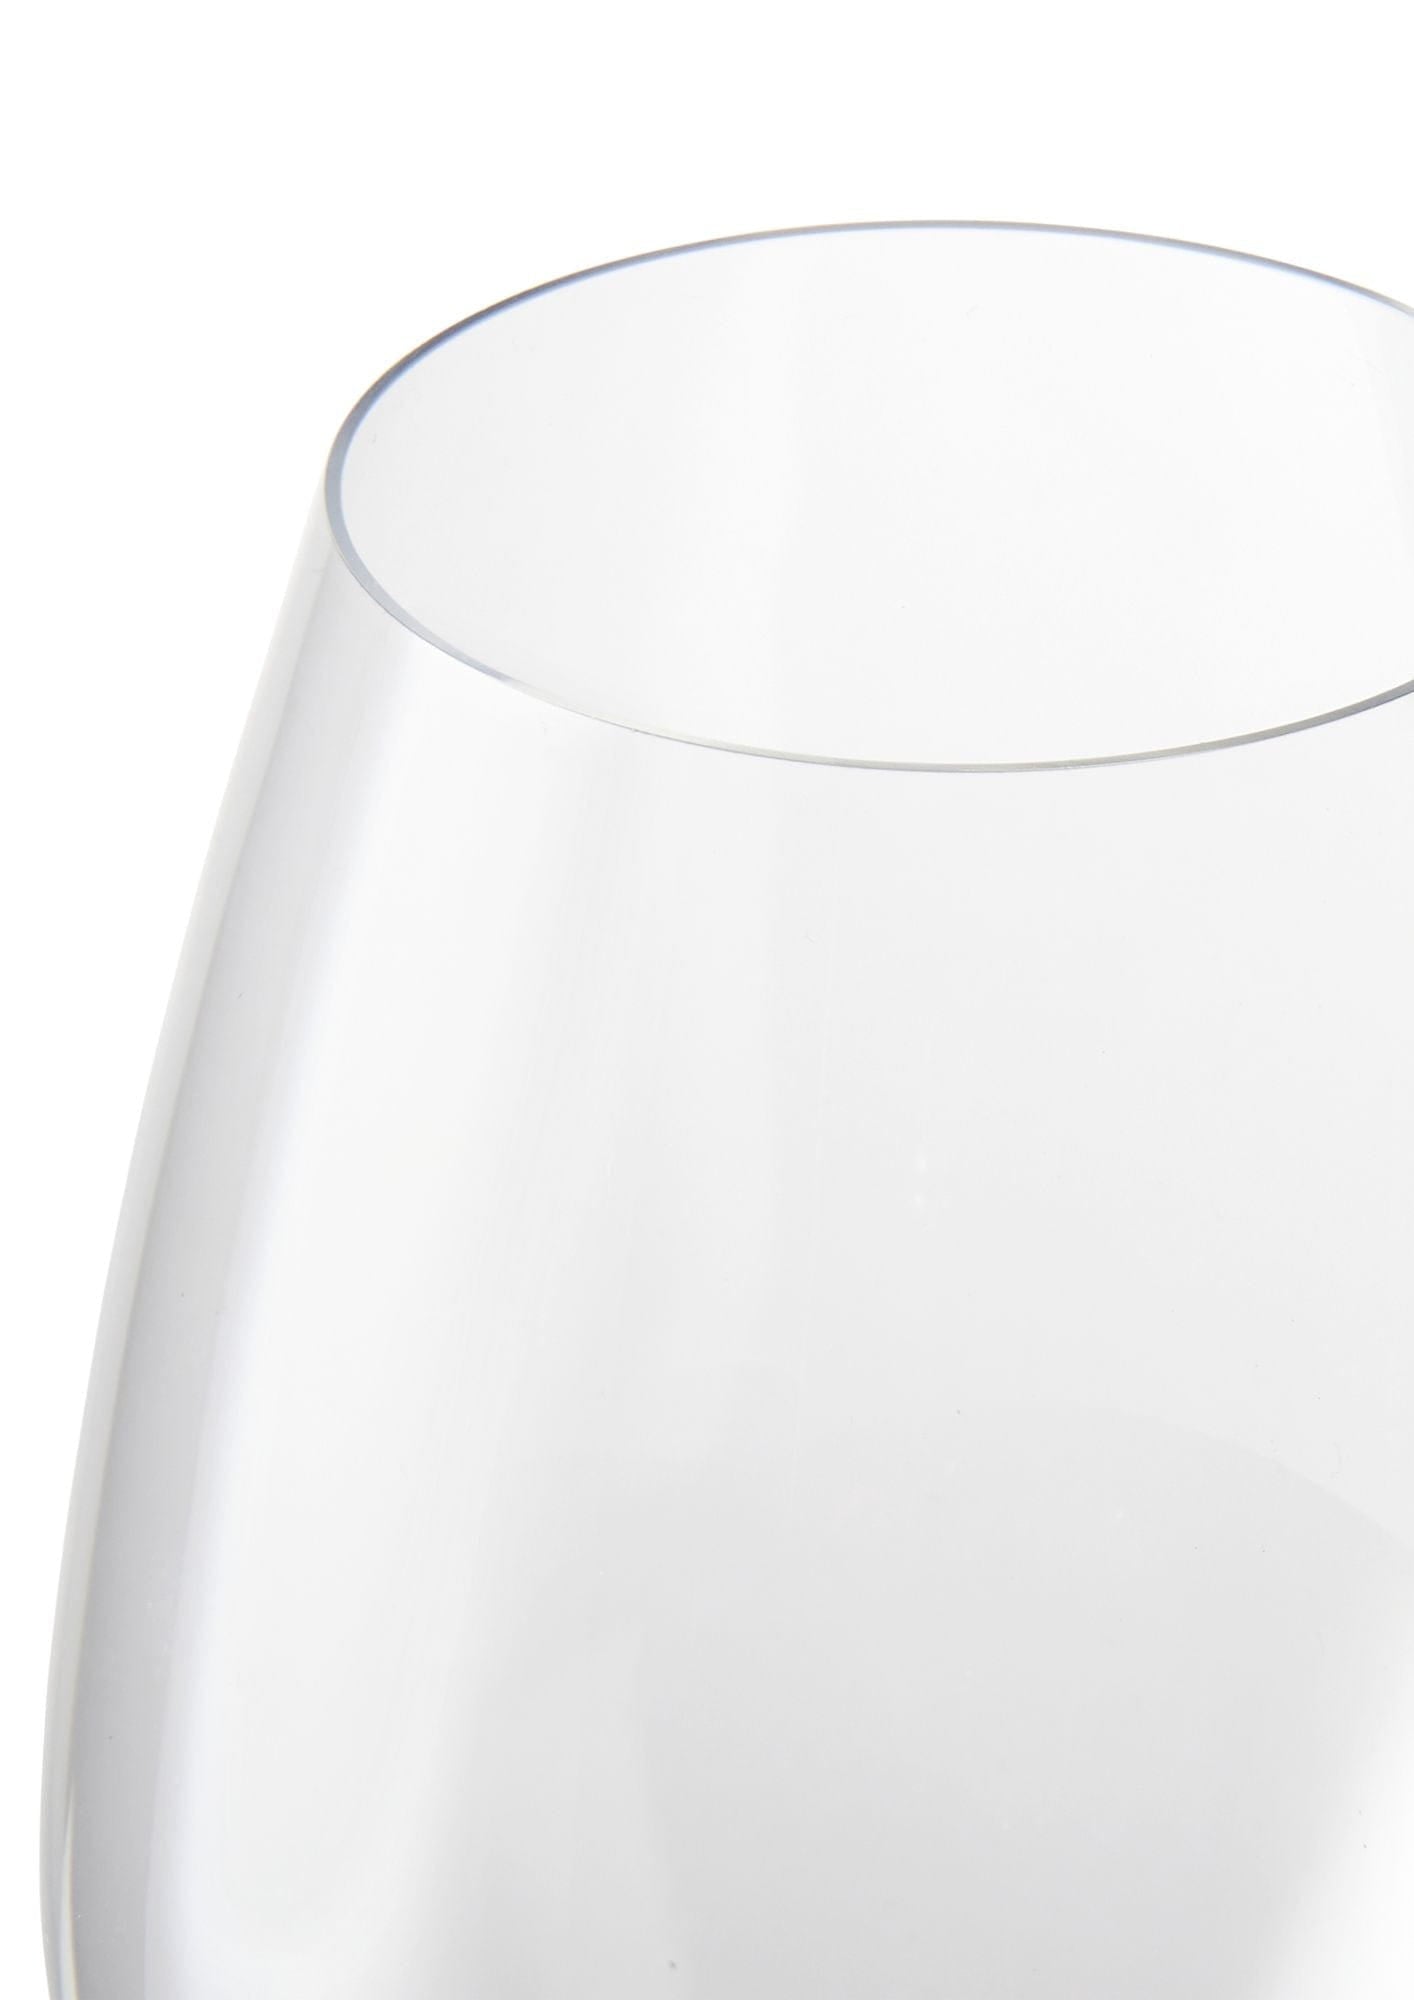 Rosendahl Premium Champagne Glass套装2 370毫升，清除